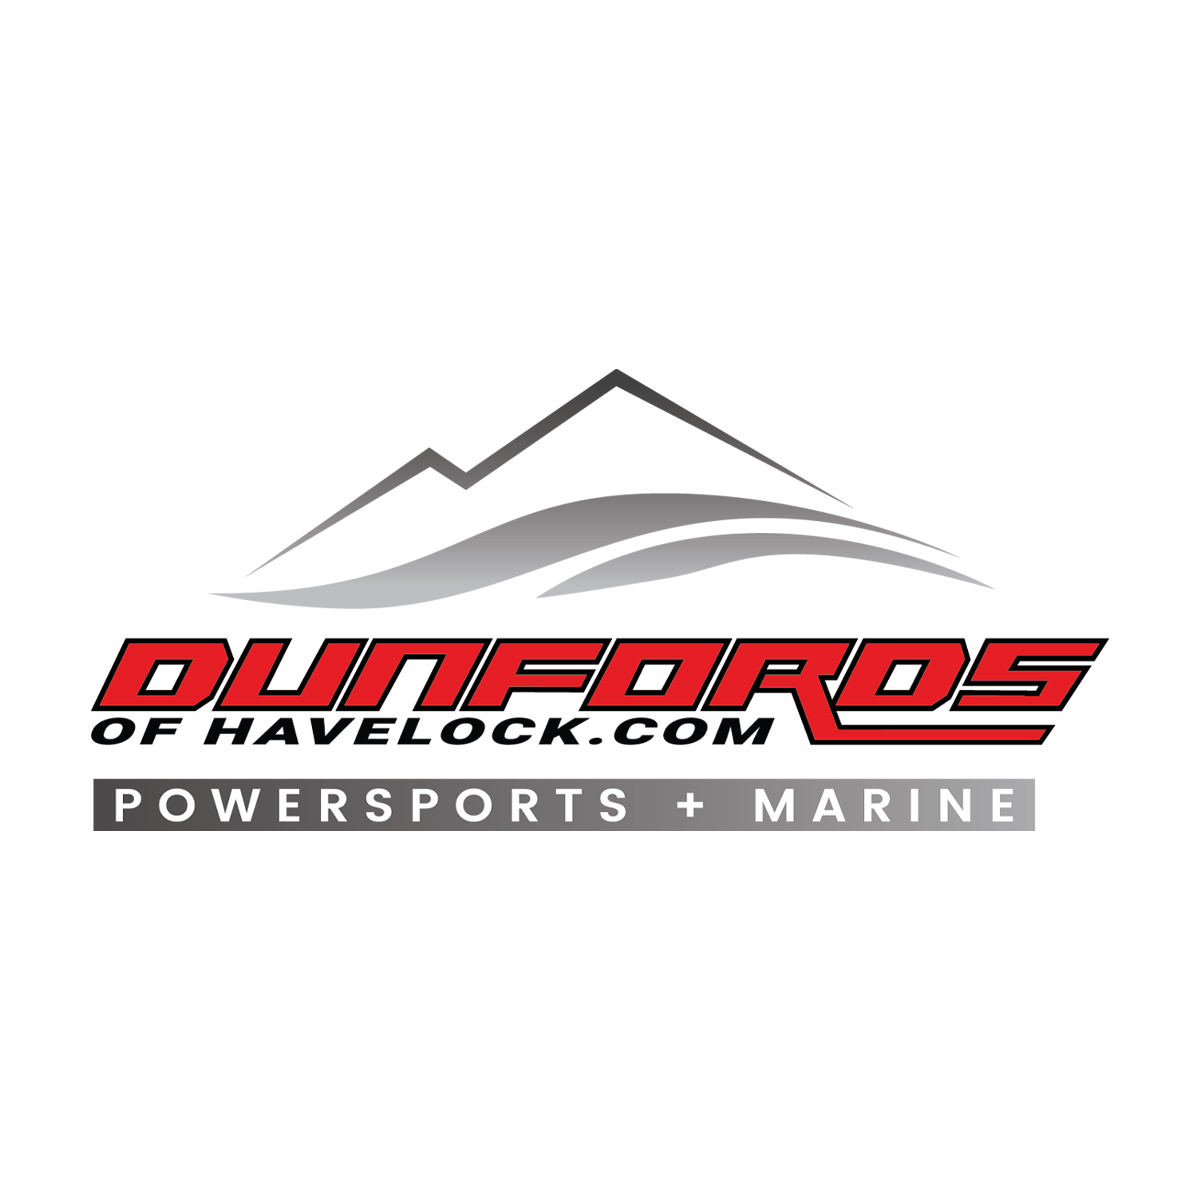 Dunford of Havelock Logo